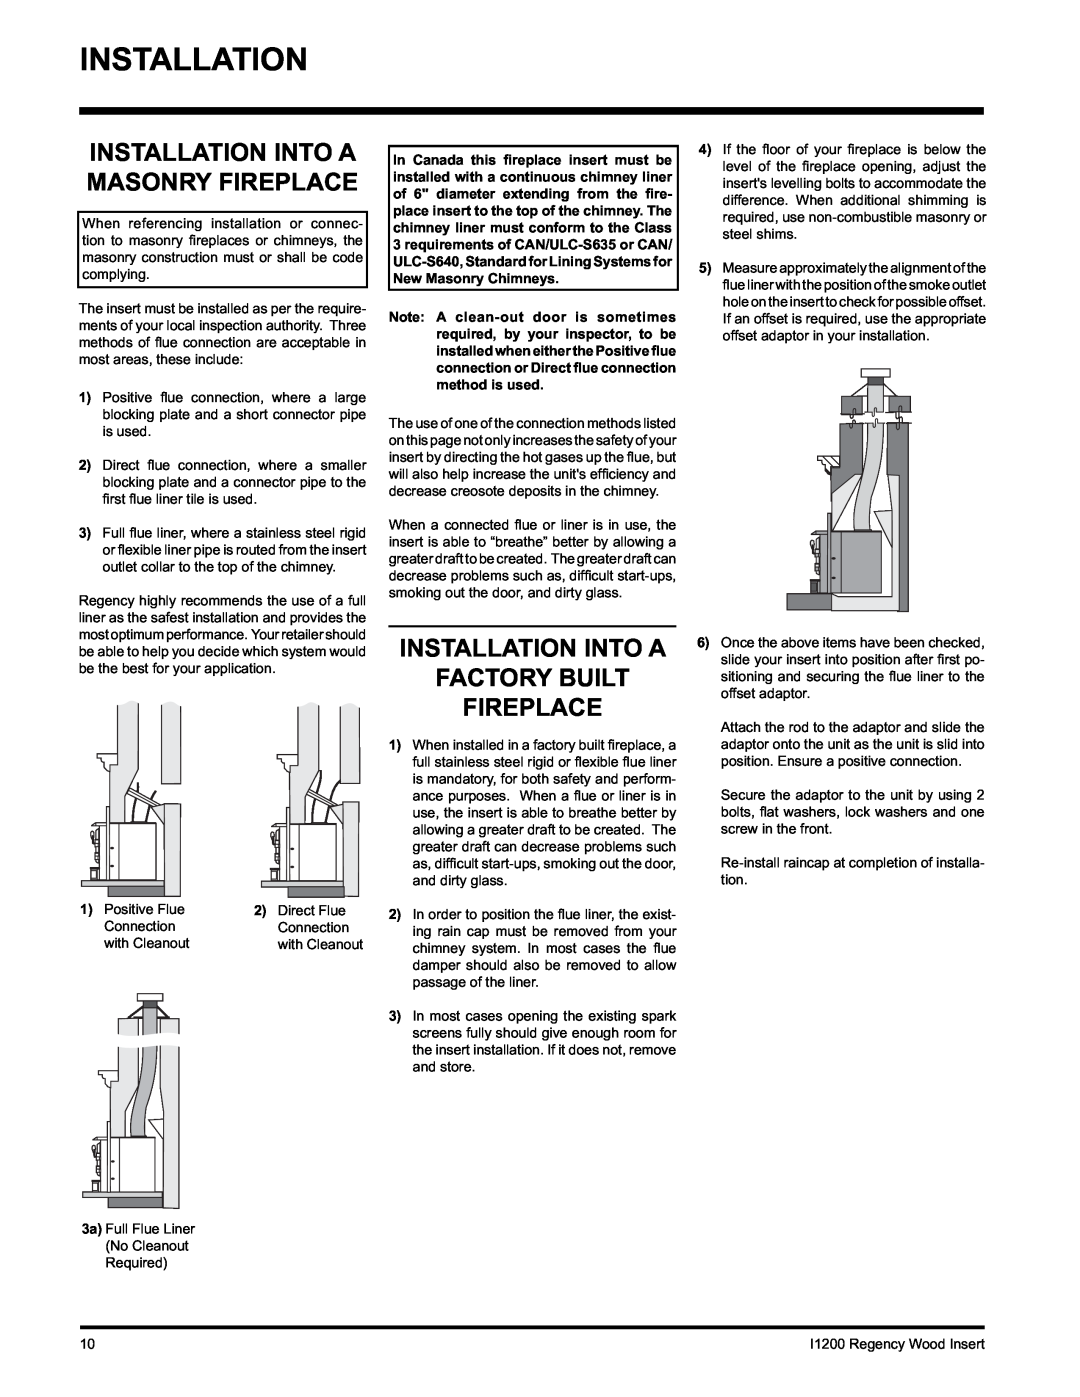 Regency I1200S installation manual Installation Into A Factory Built Fireplace, Installation Into A Masonry Fireplace 